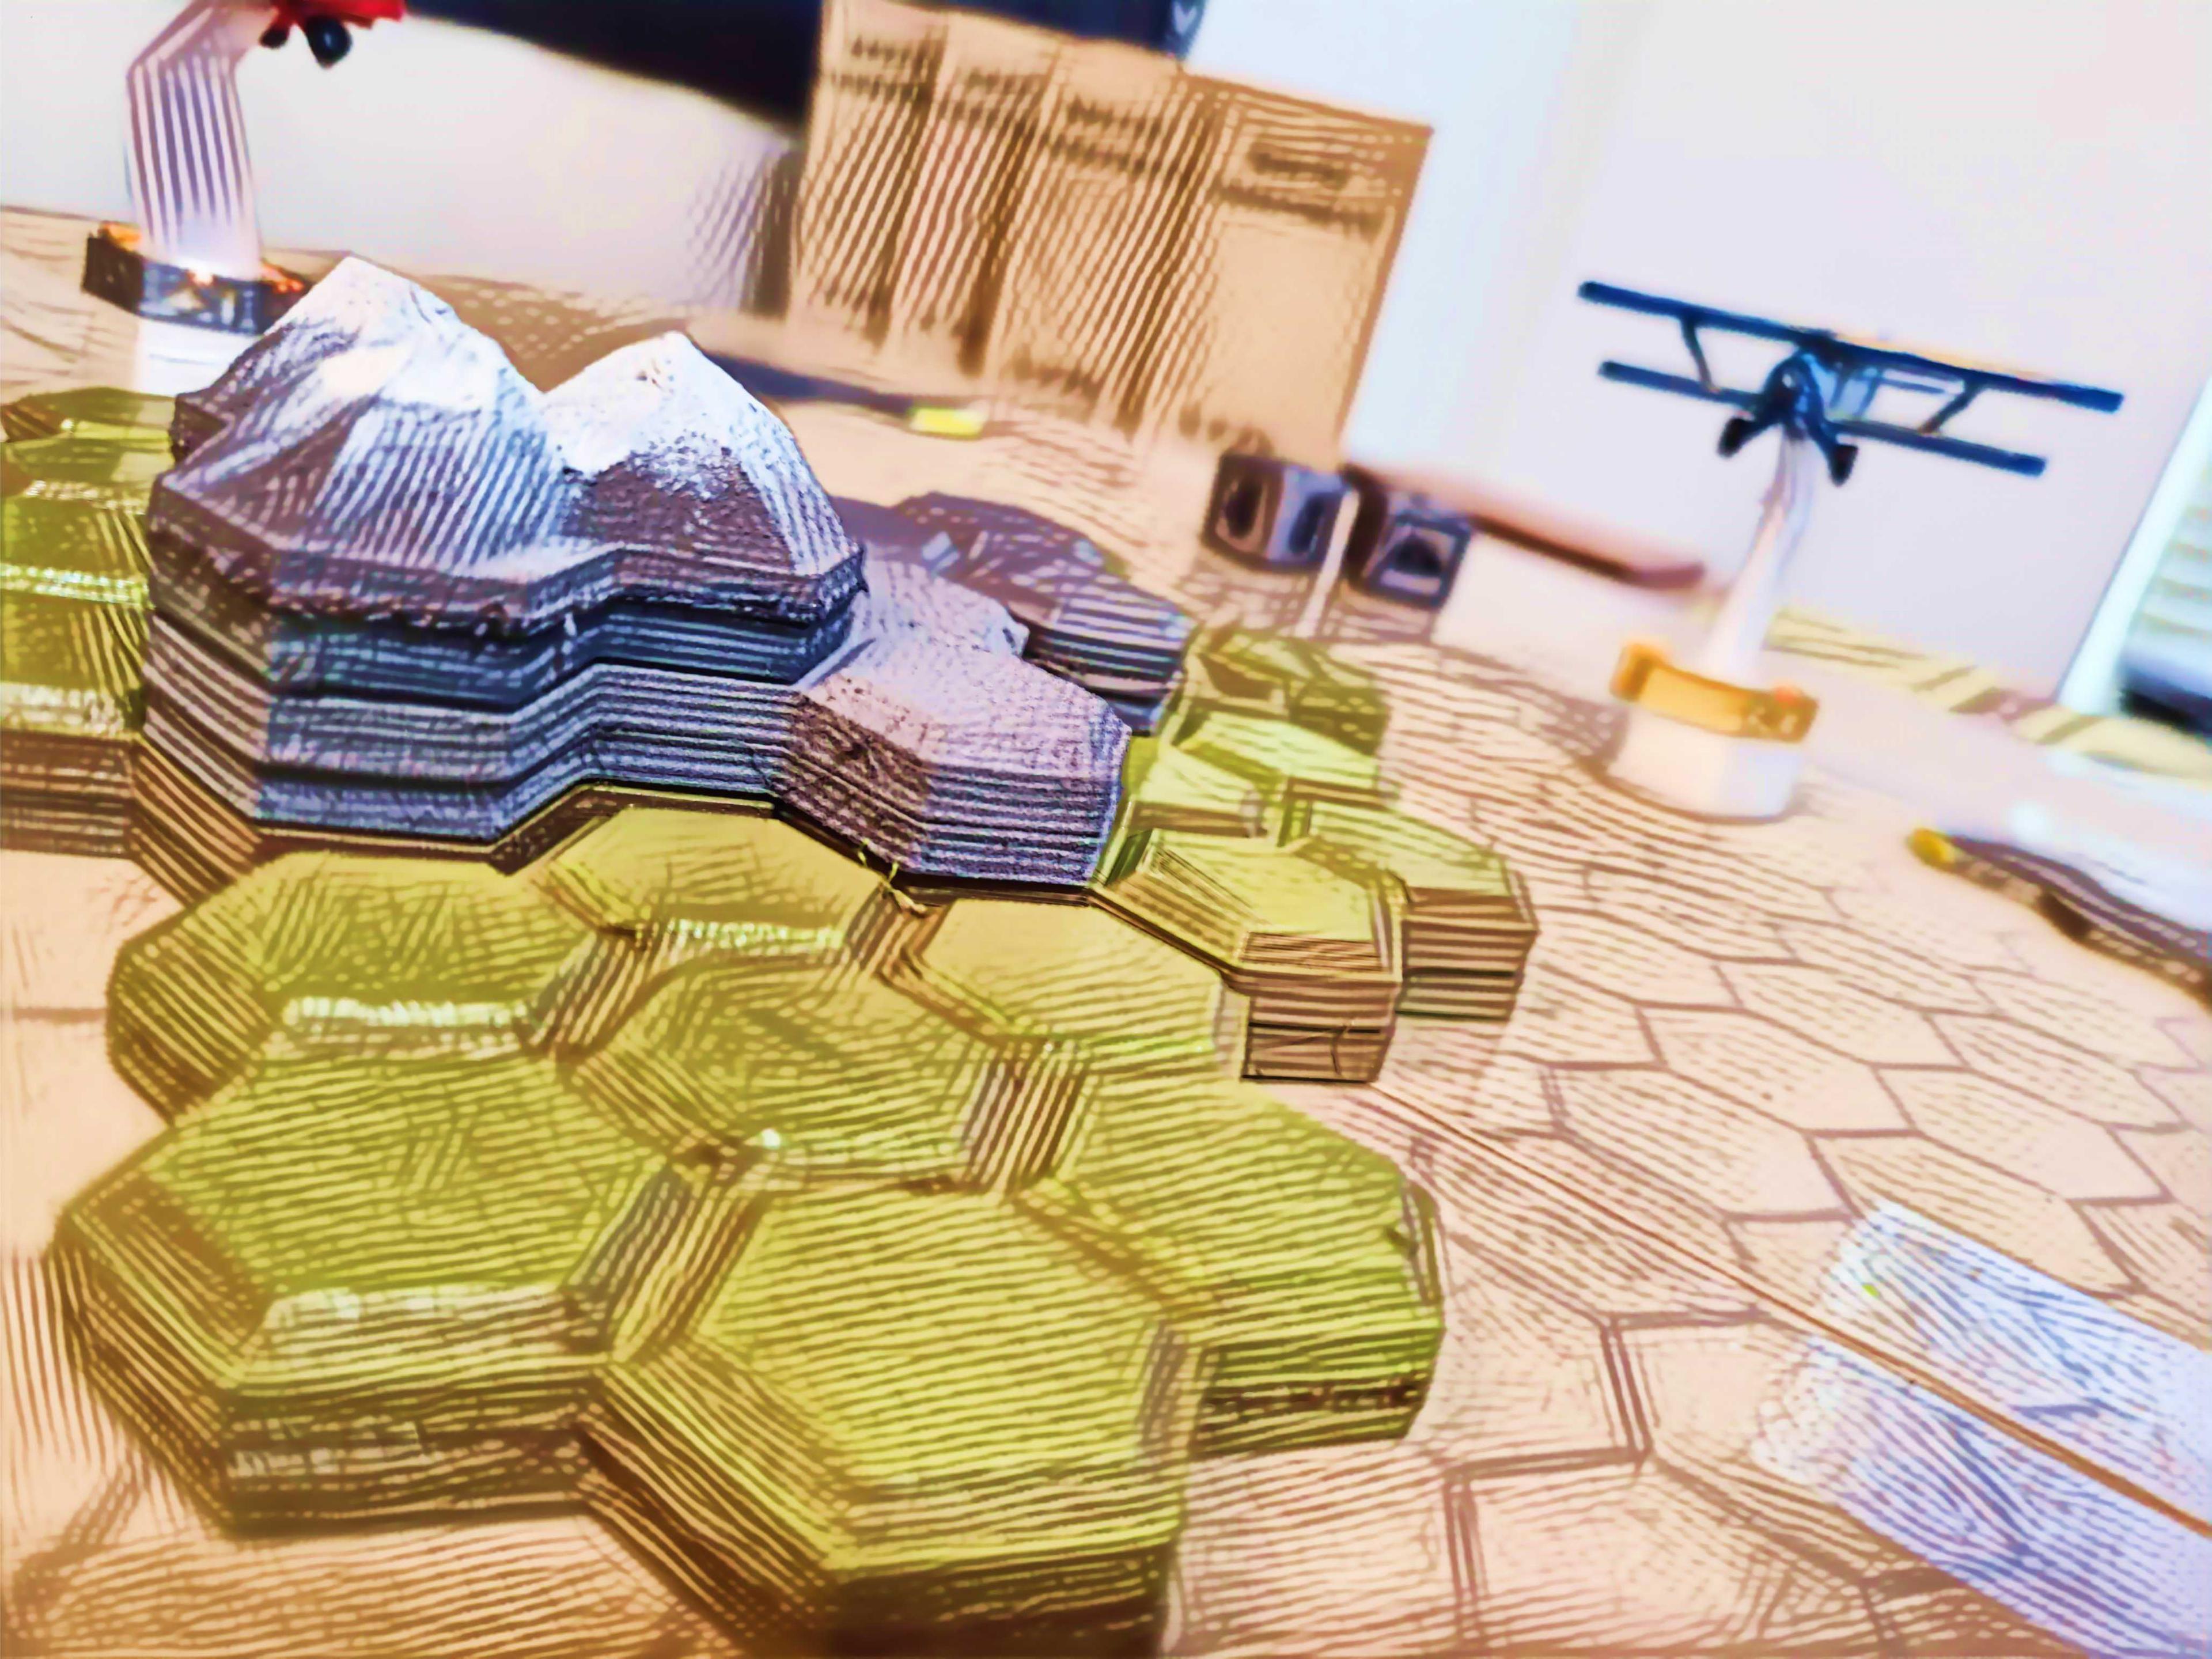 Air Mail Mavericks - open source tabletop adventure game 3d model